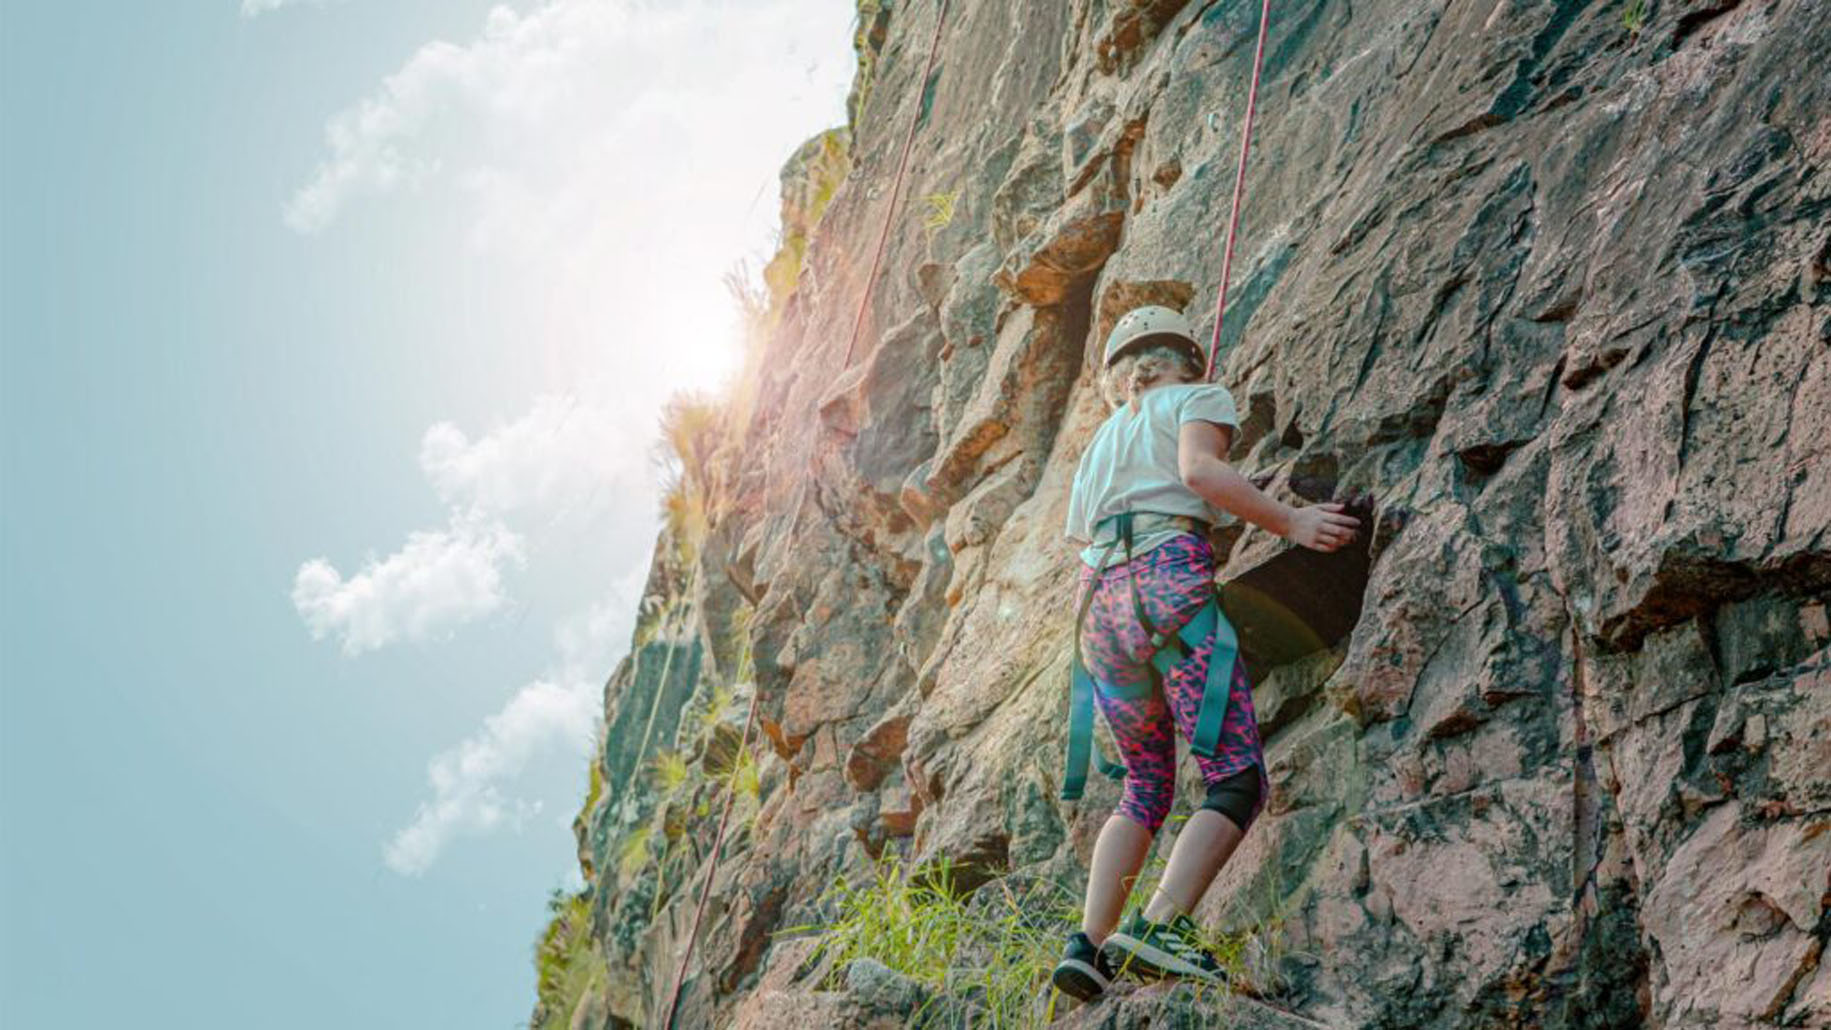  /images/adventures/queensland/Rock-Climbing/rockclimber-sun-hits-perfectly_1.jpg